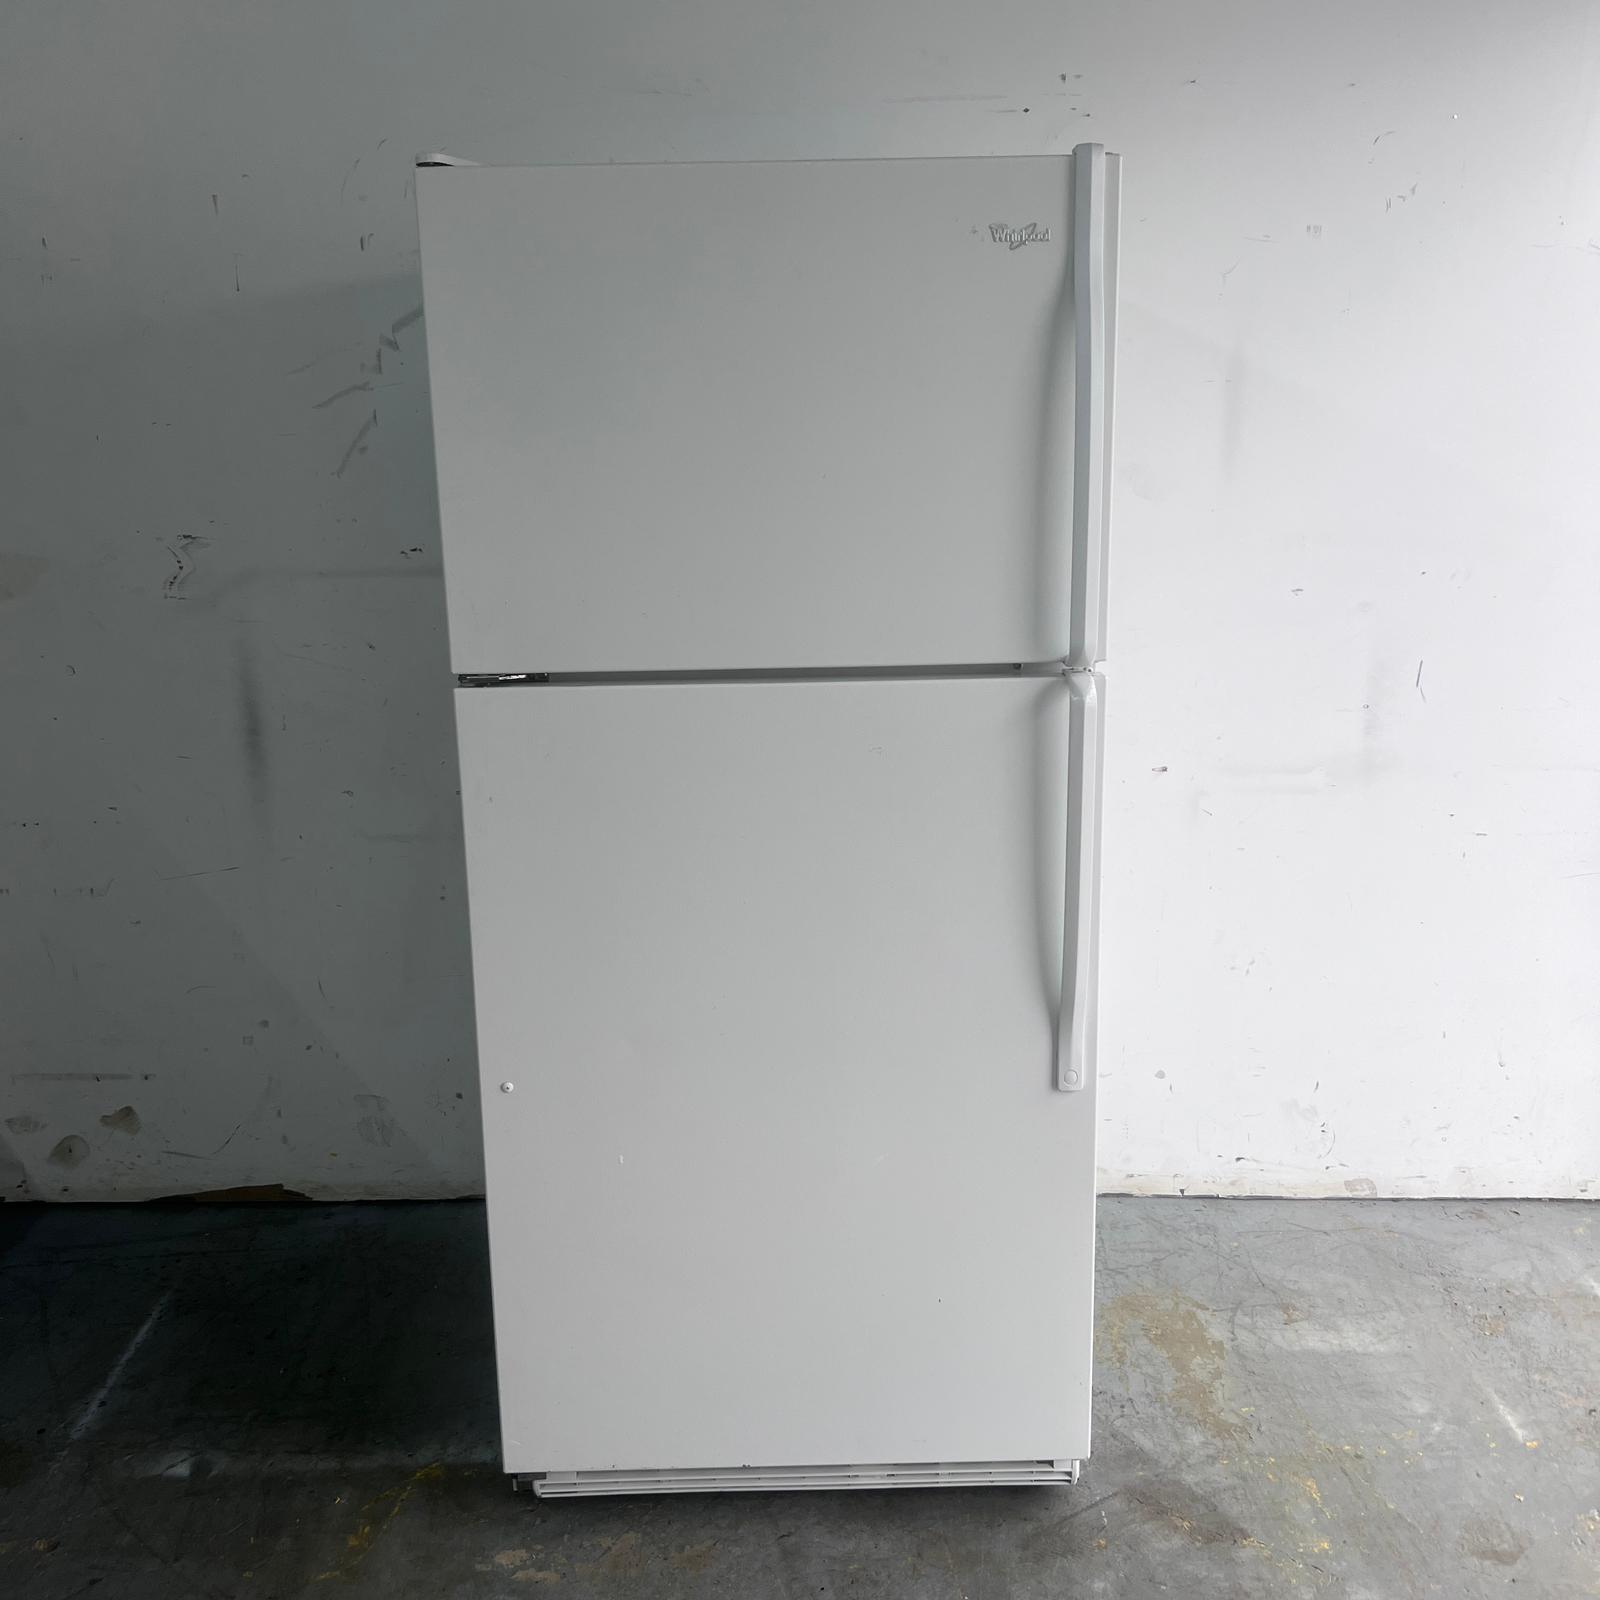 Whirlpool-Top-and-Bottom-Refrigerator-w-Ice-Maker